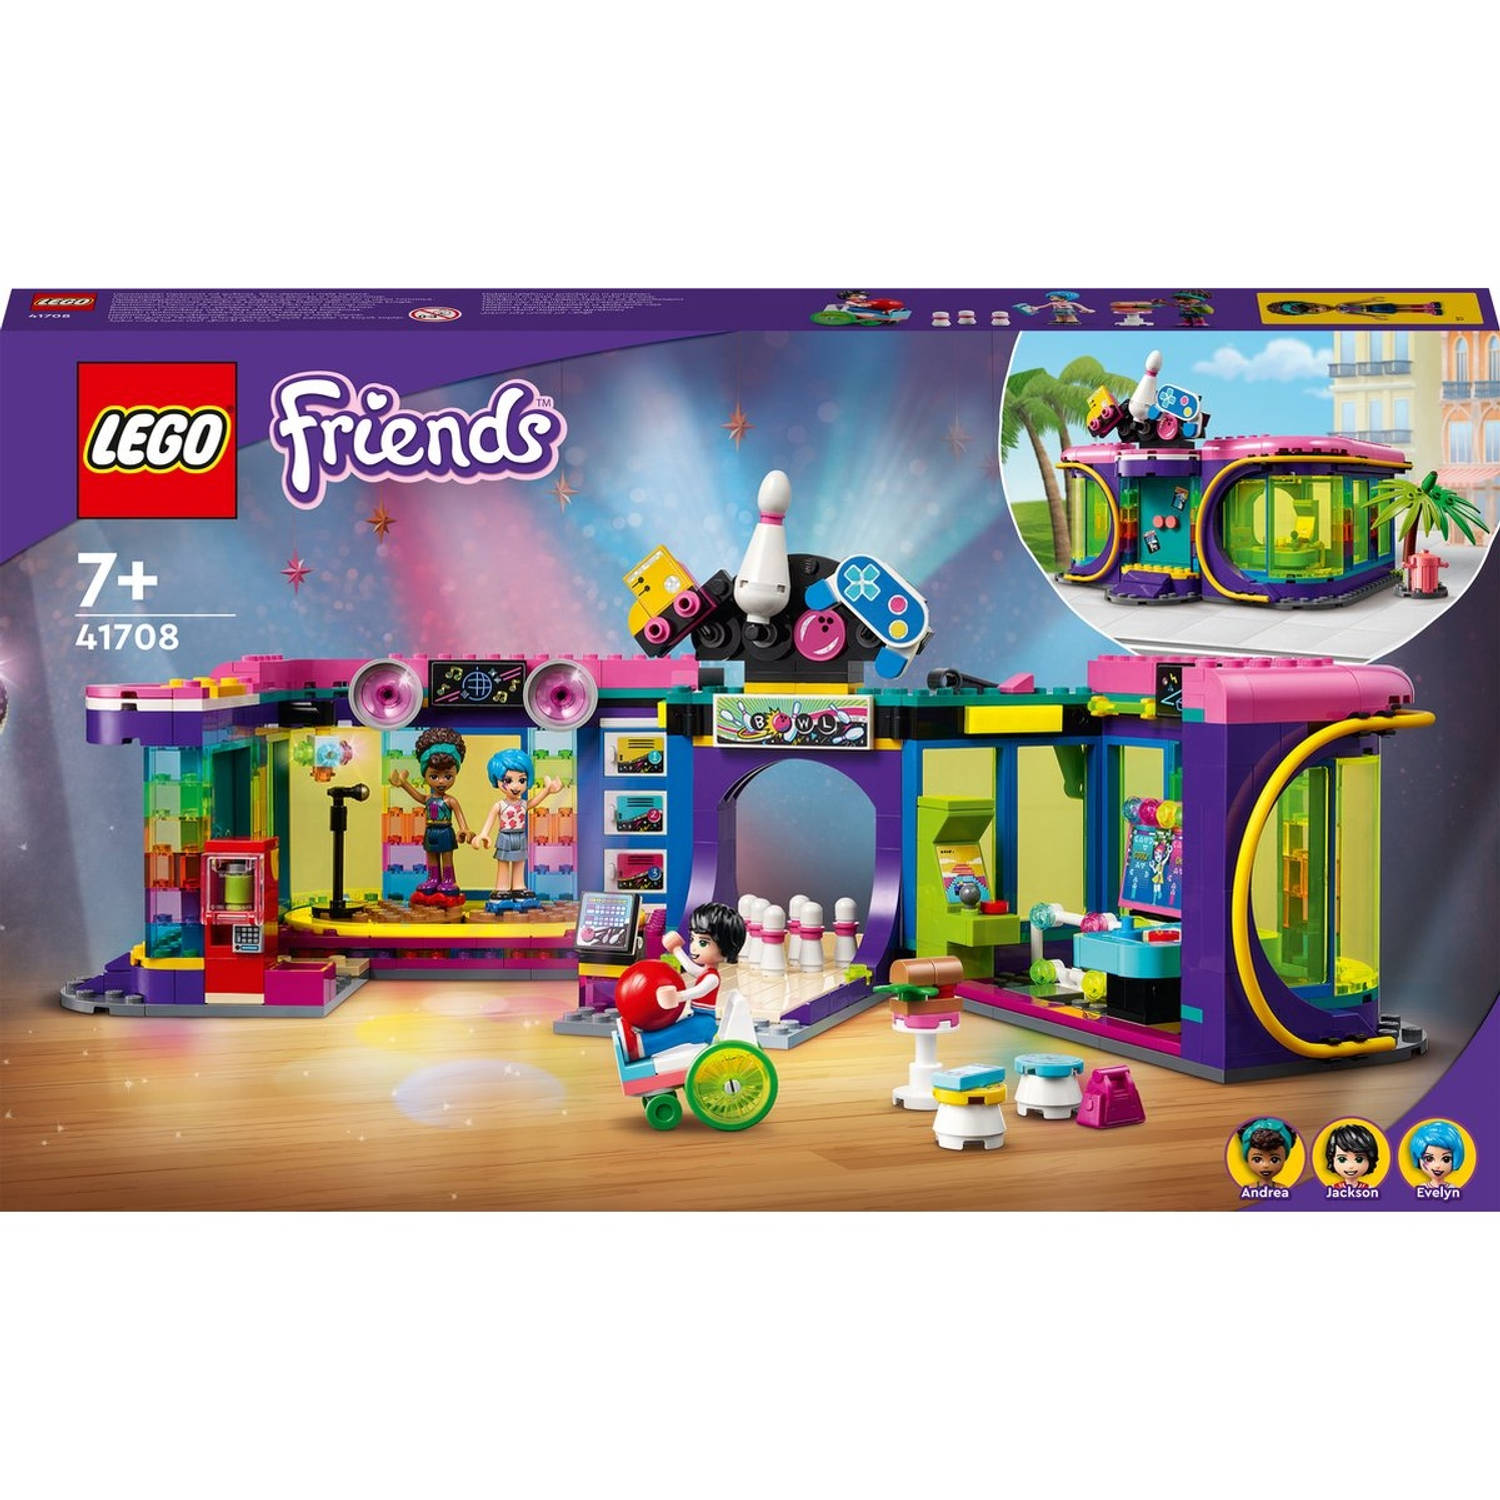 LEGOÂ® Friends 41708 vriendenrolschaatsdisco